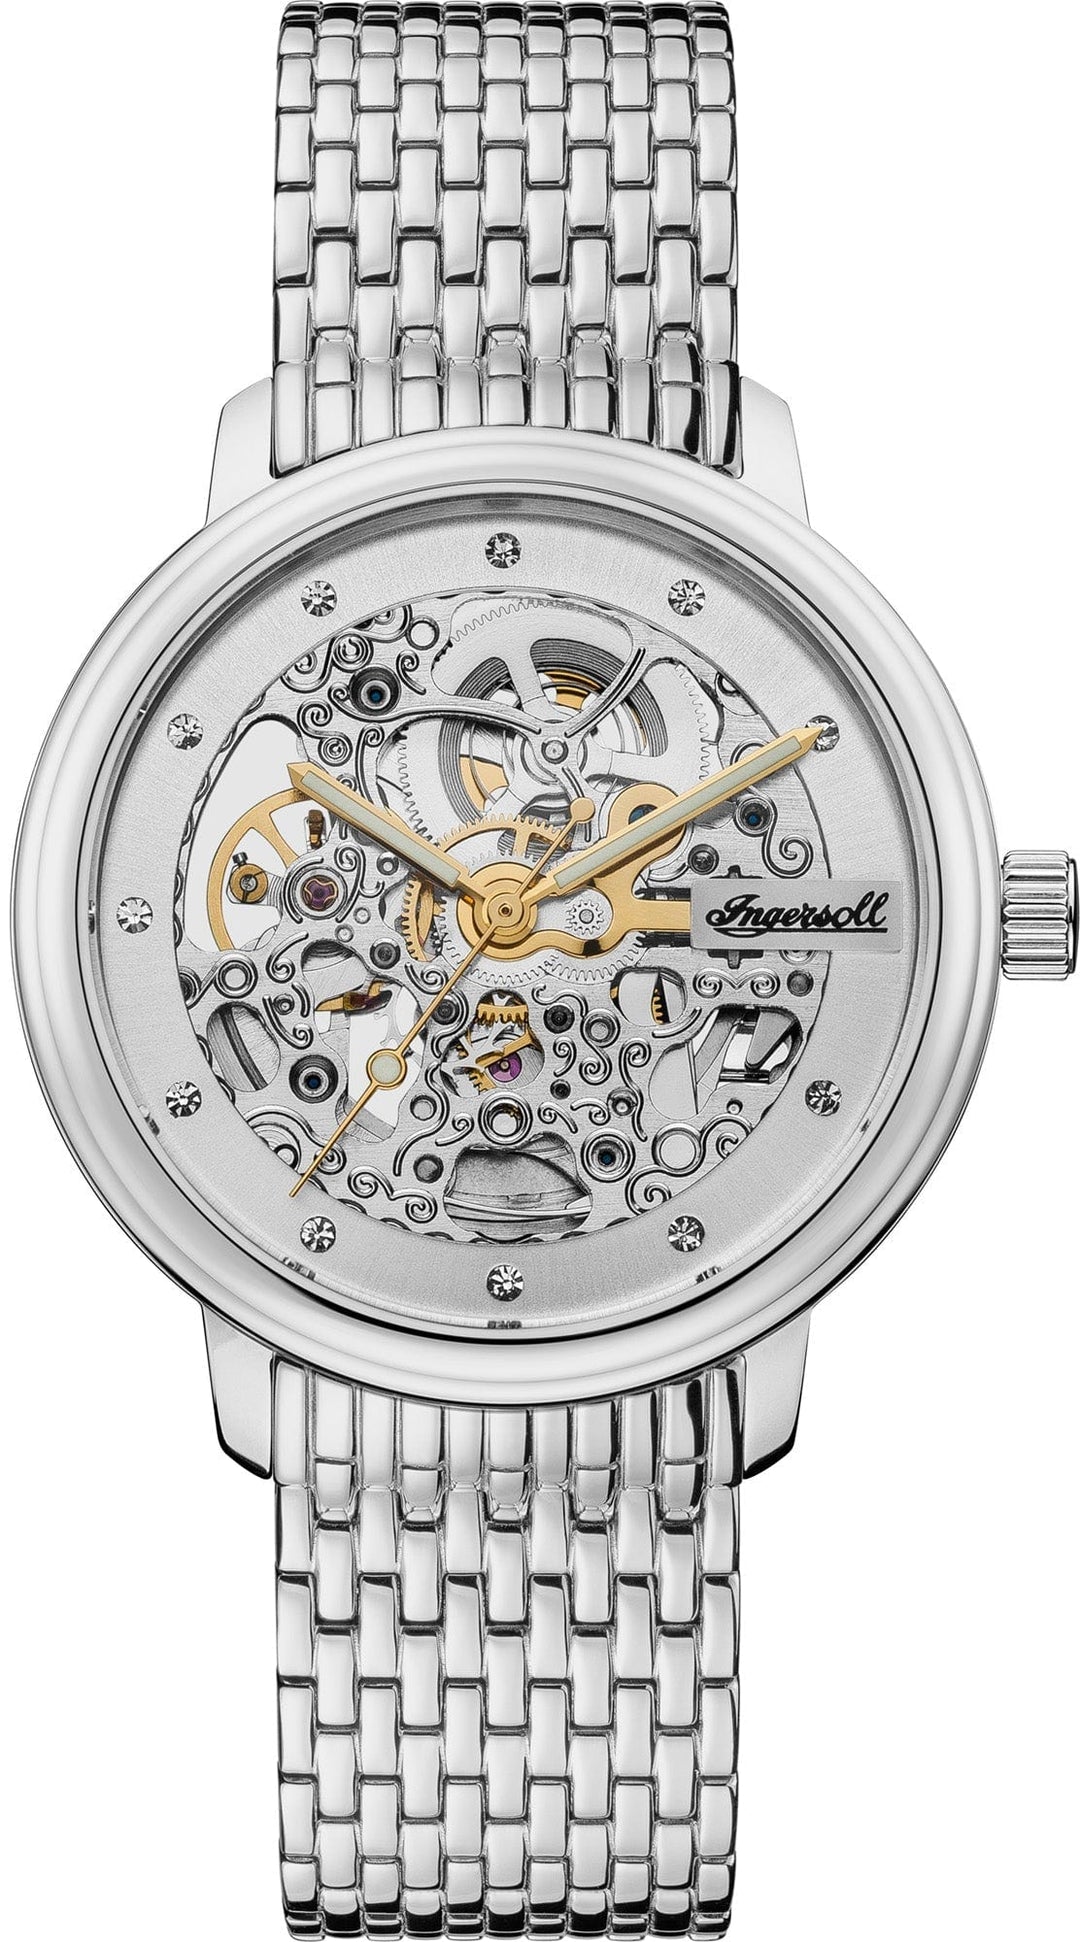 Ingersoll Watch Ingersoll Crown Automatic Silver Watch Brand